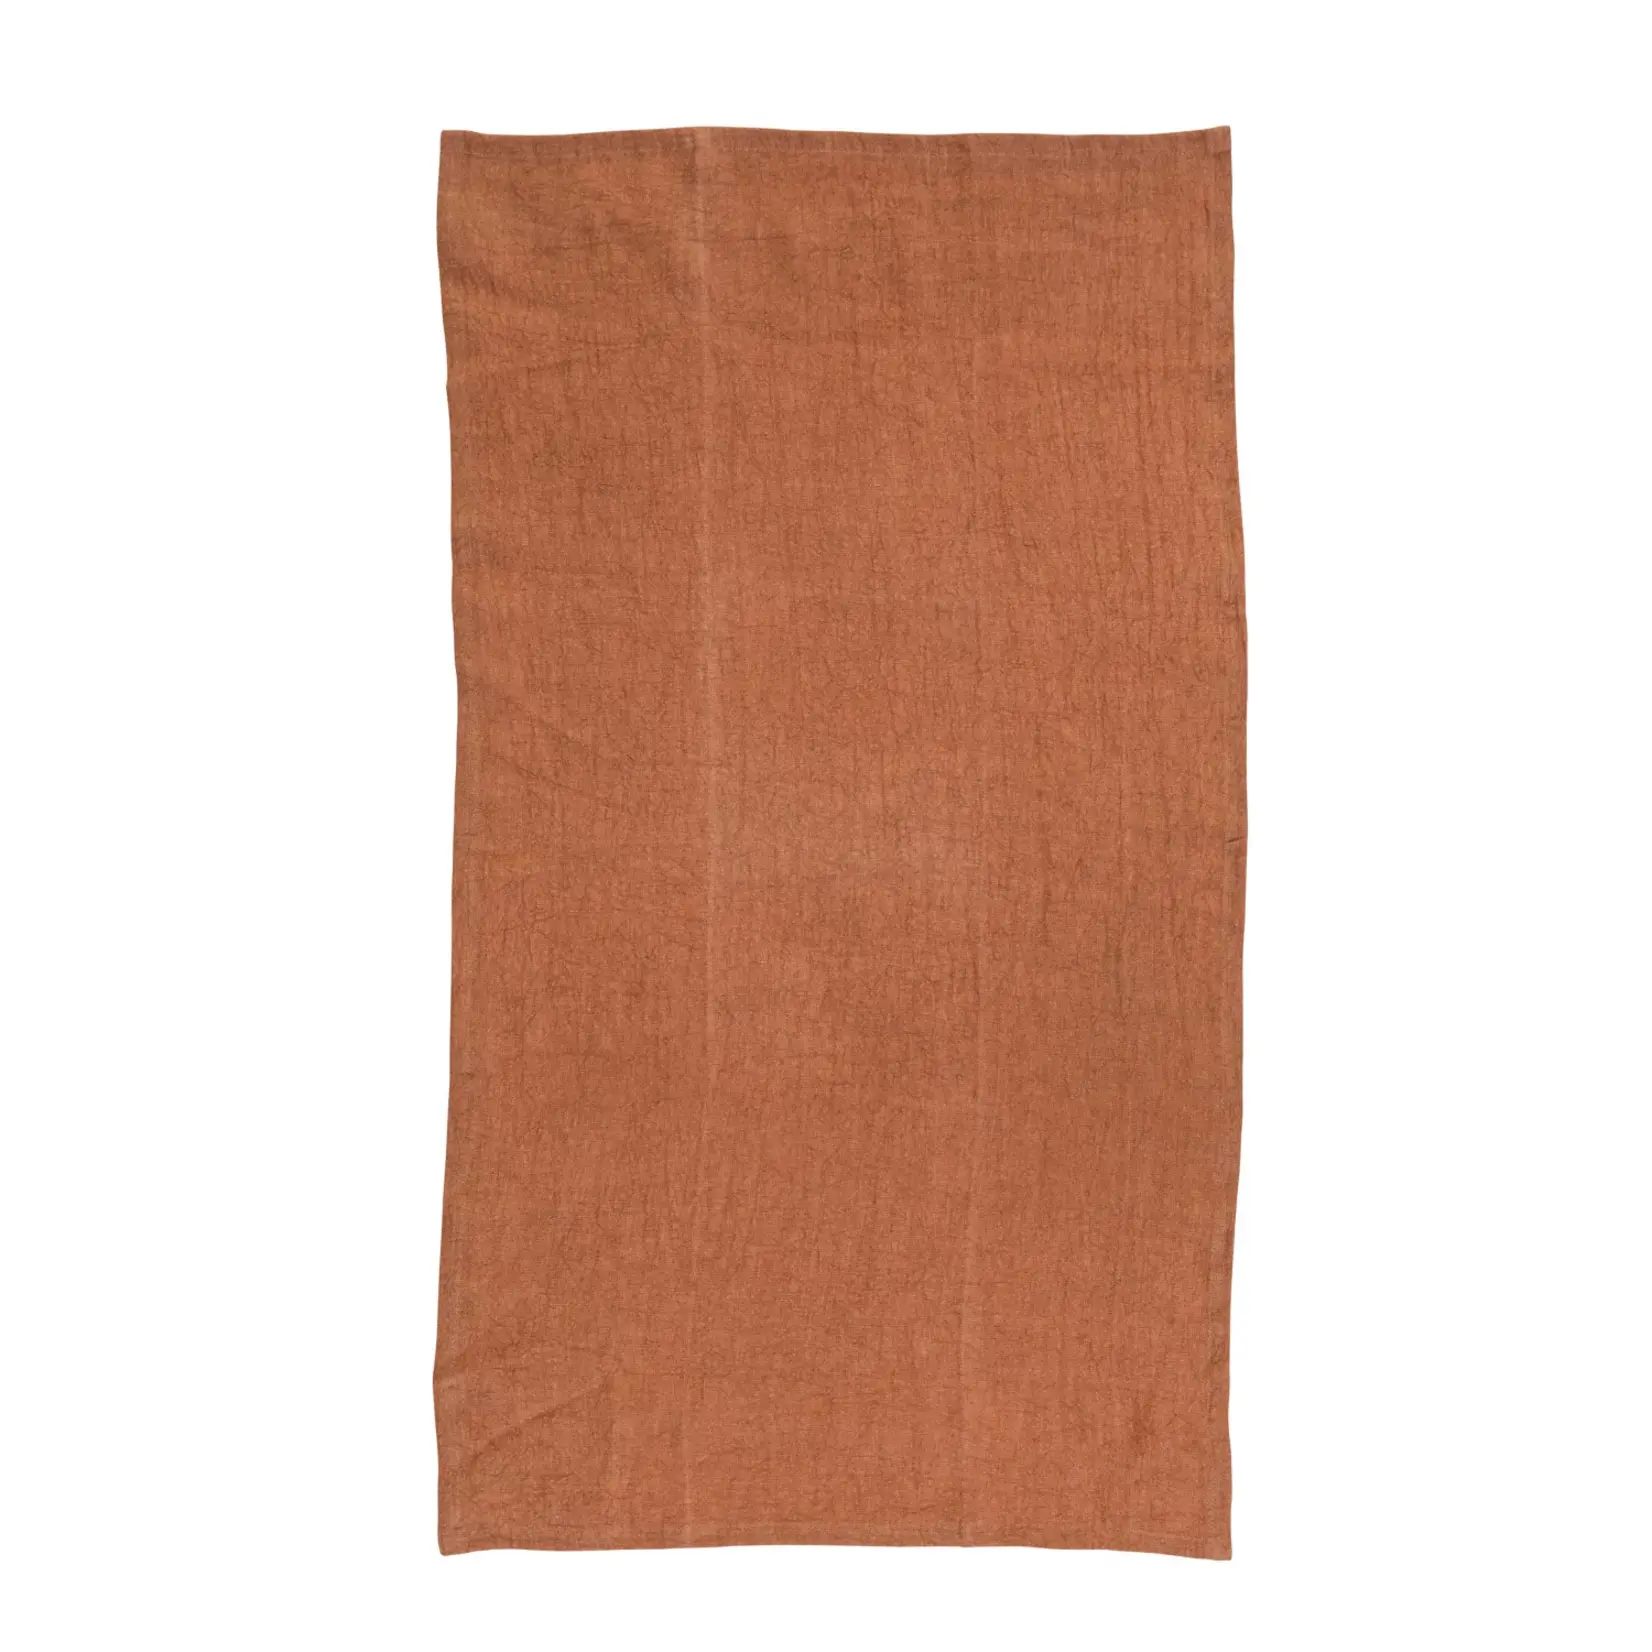 Stonewashed Linen Tea Towel Terra Cotta, 28" x 18"